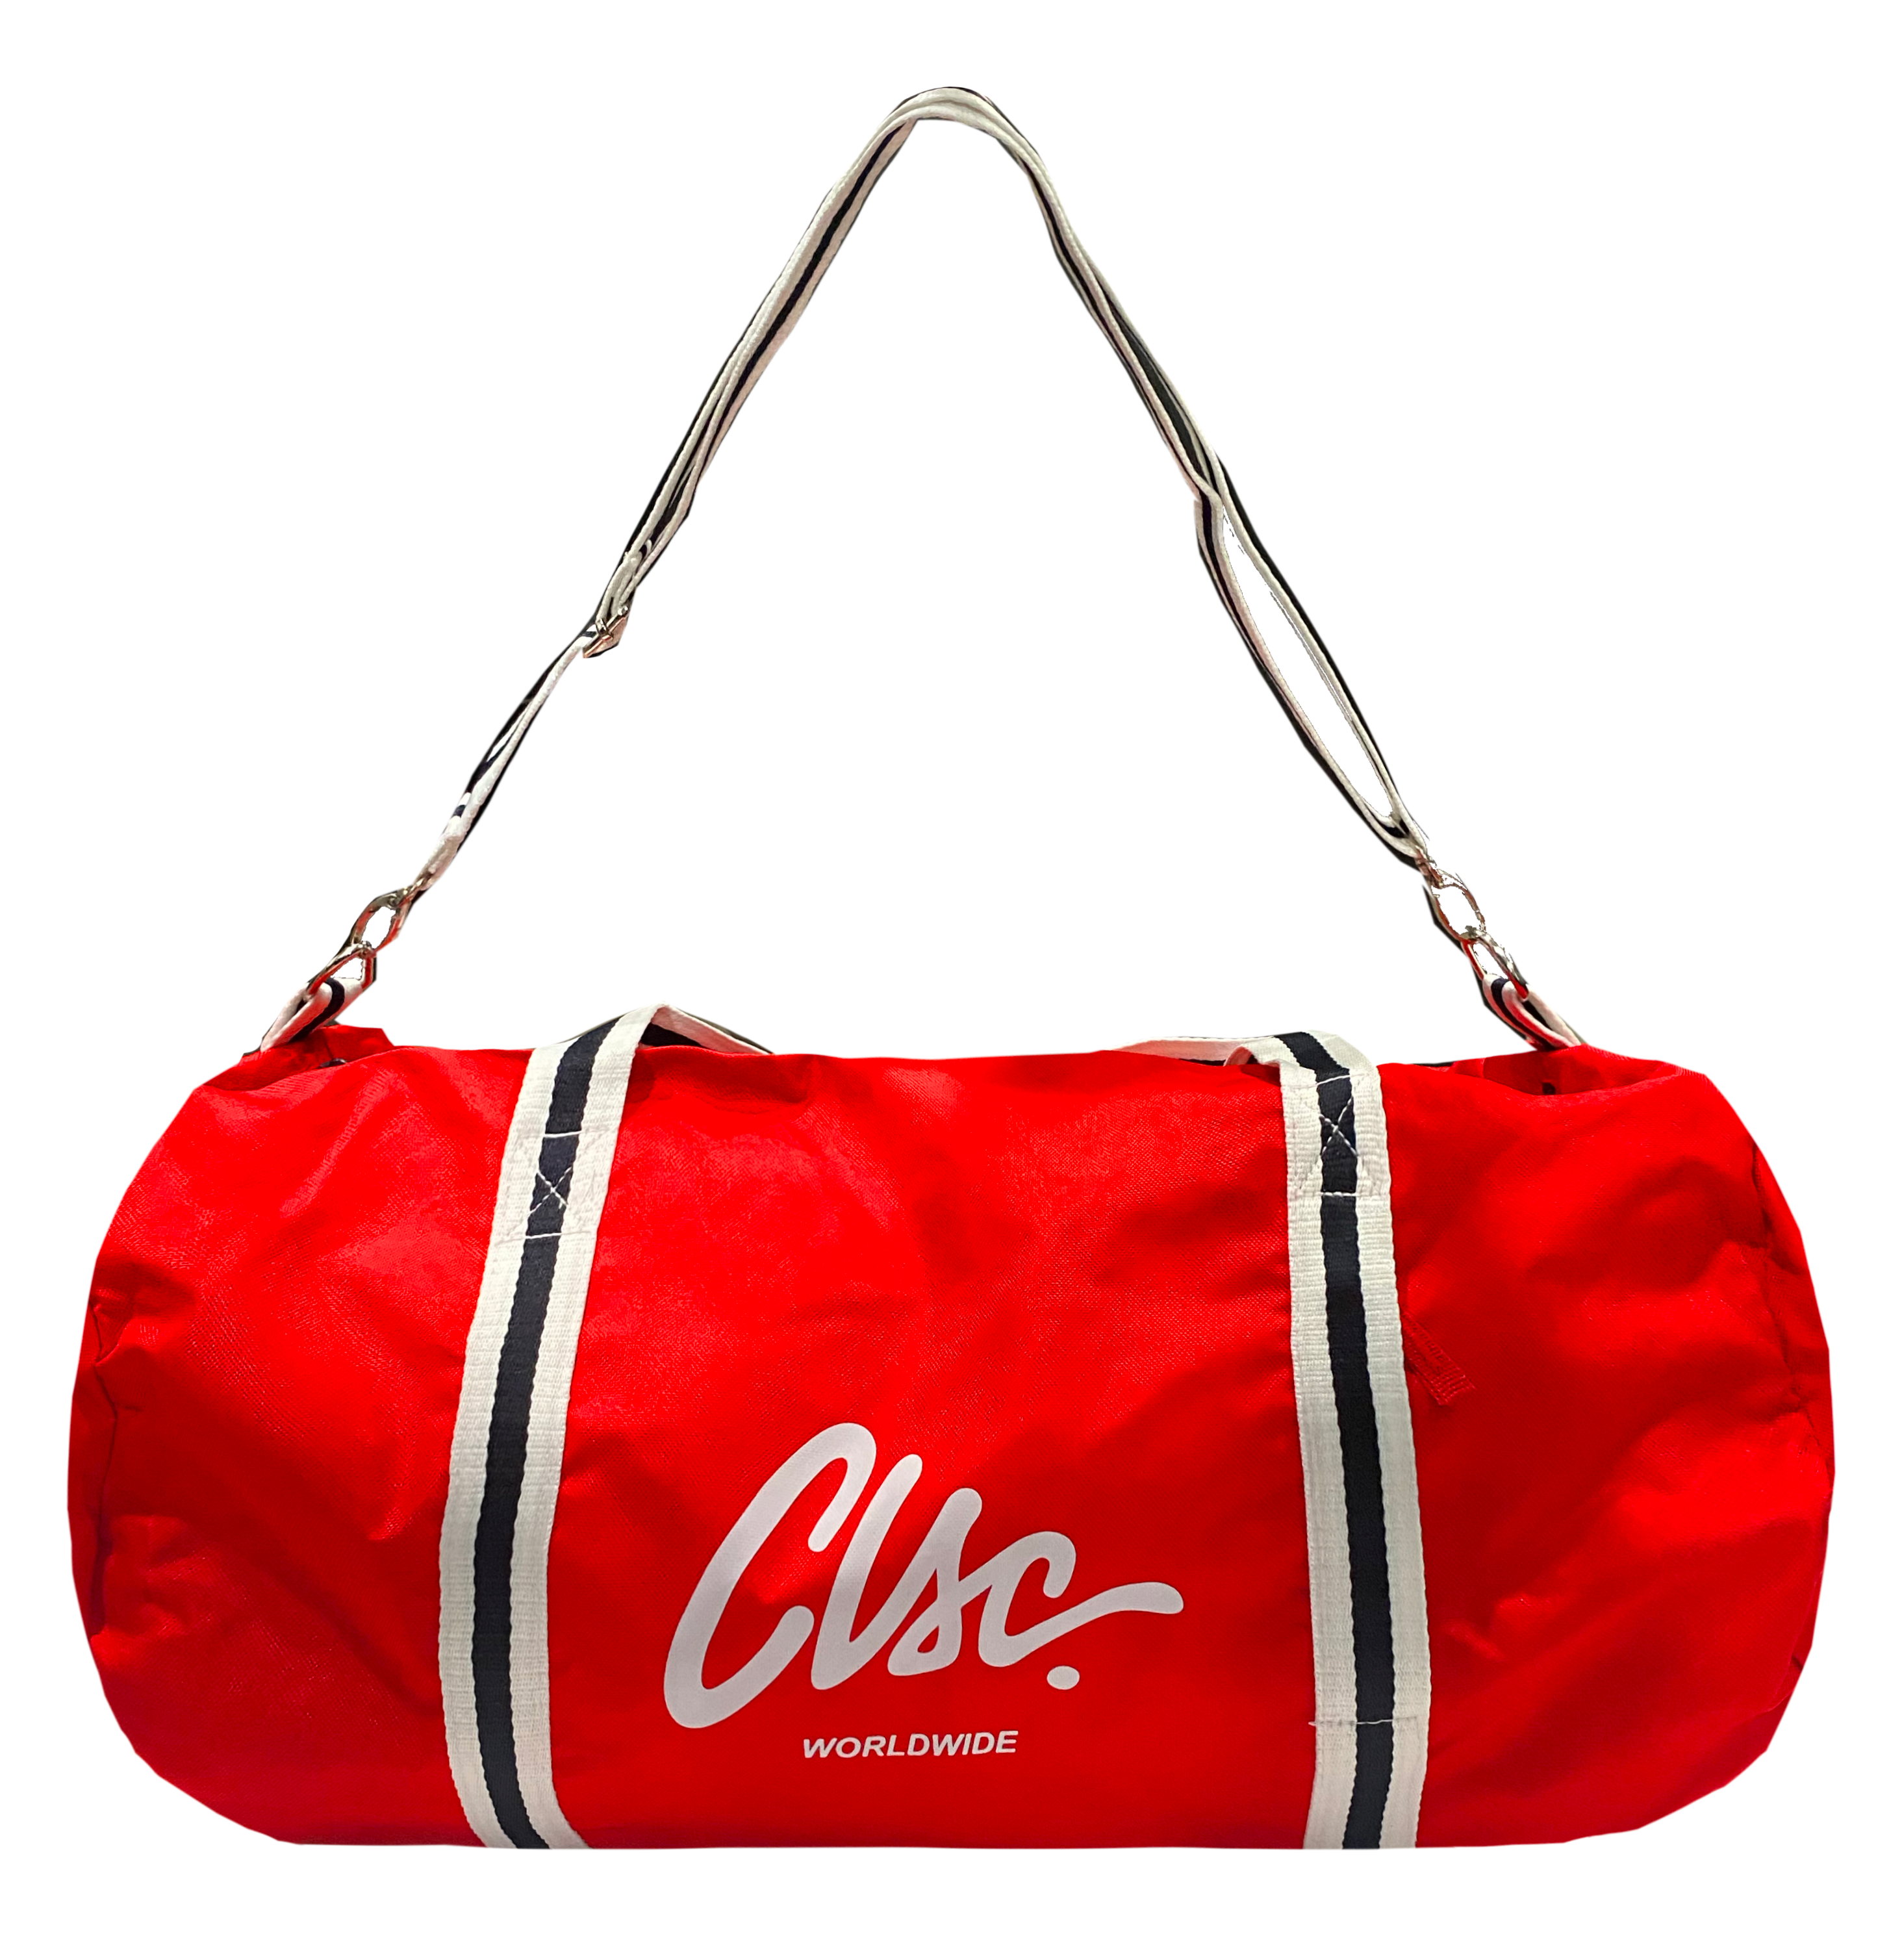 CLSC Worldwide Duffle Bag Red